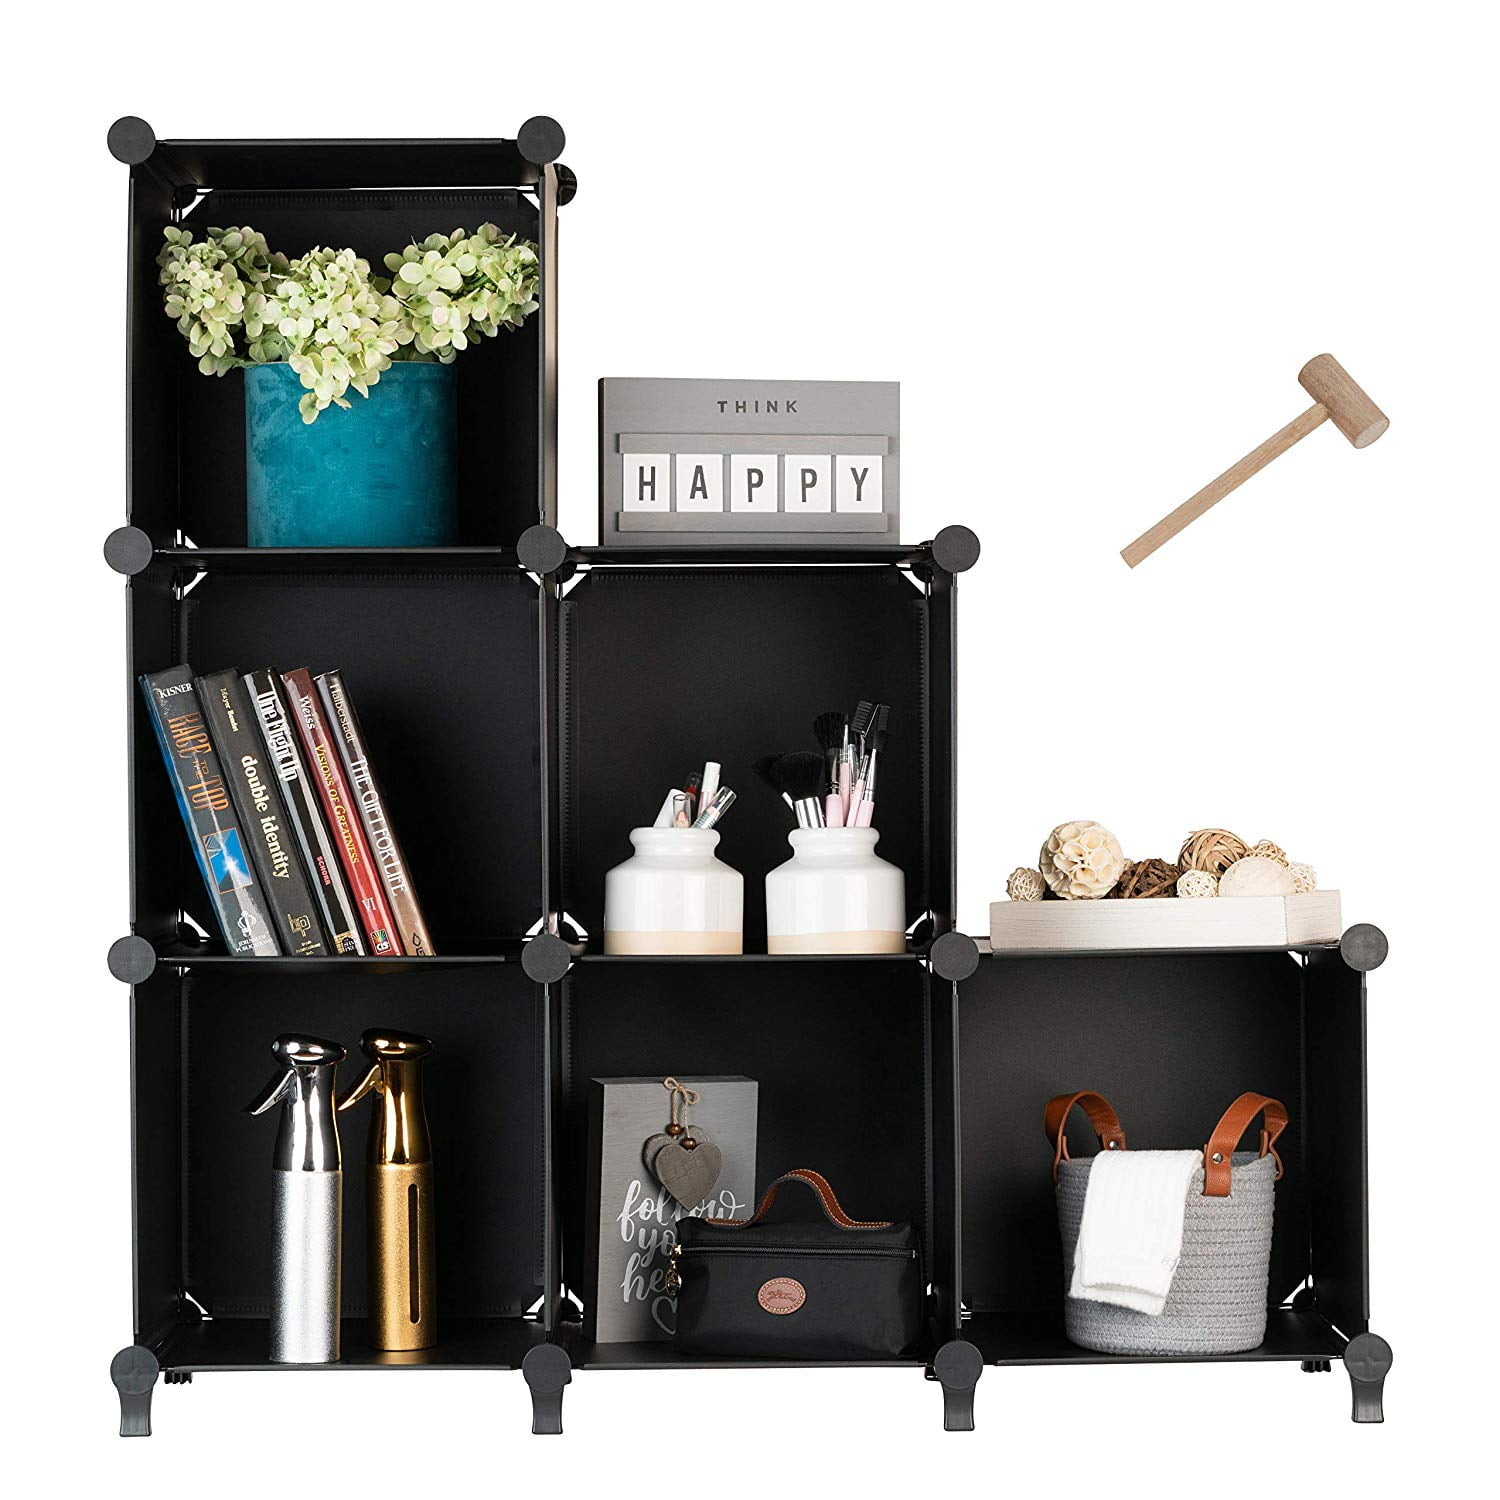 6 Cubes Storage Organiser for Home BRIAN & DANY Cube Shelves White Bedroom Office Living Room 